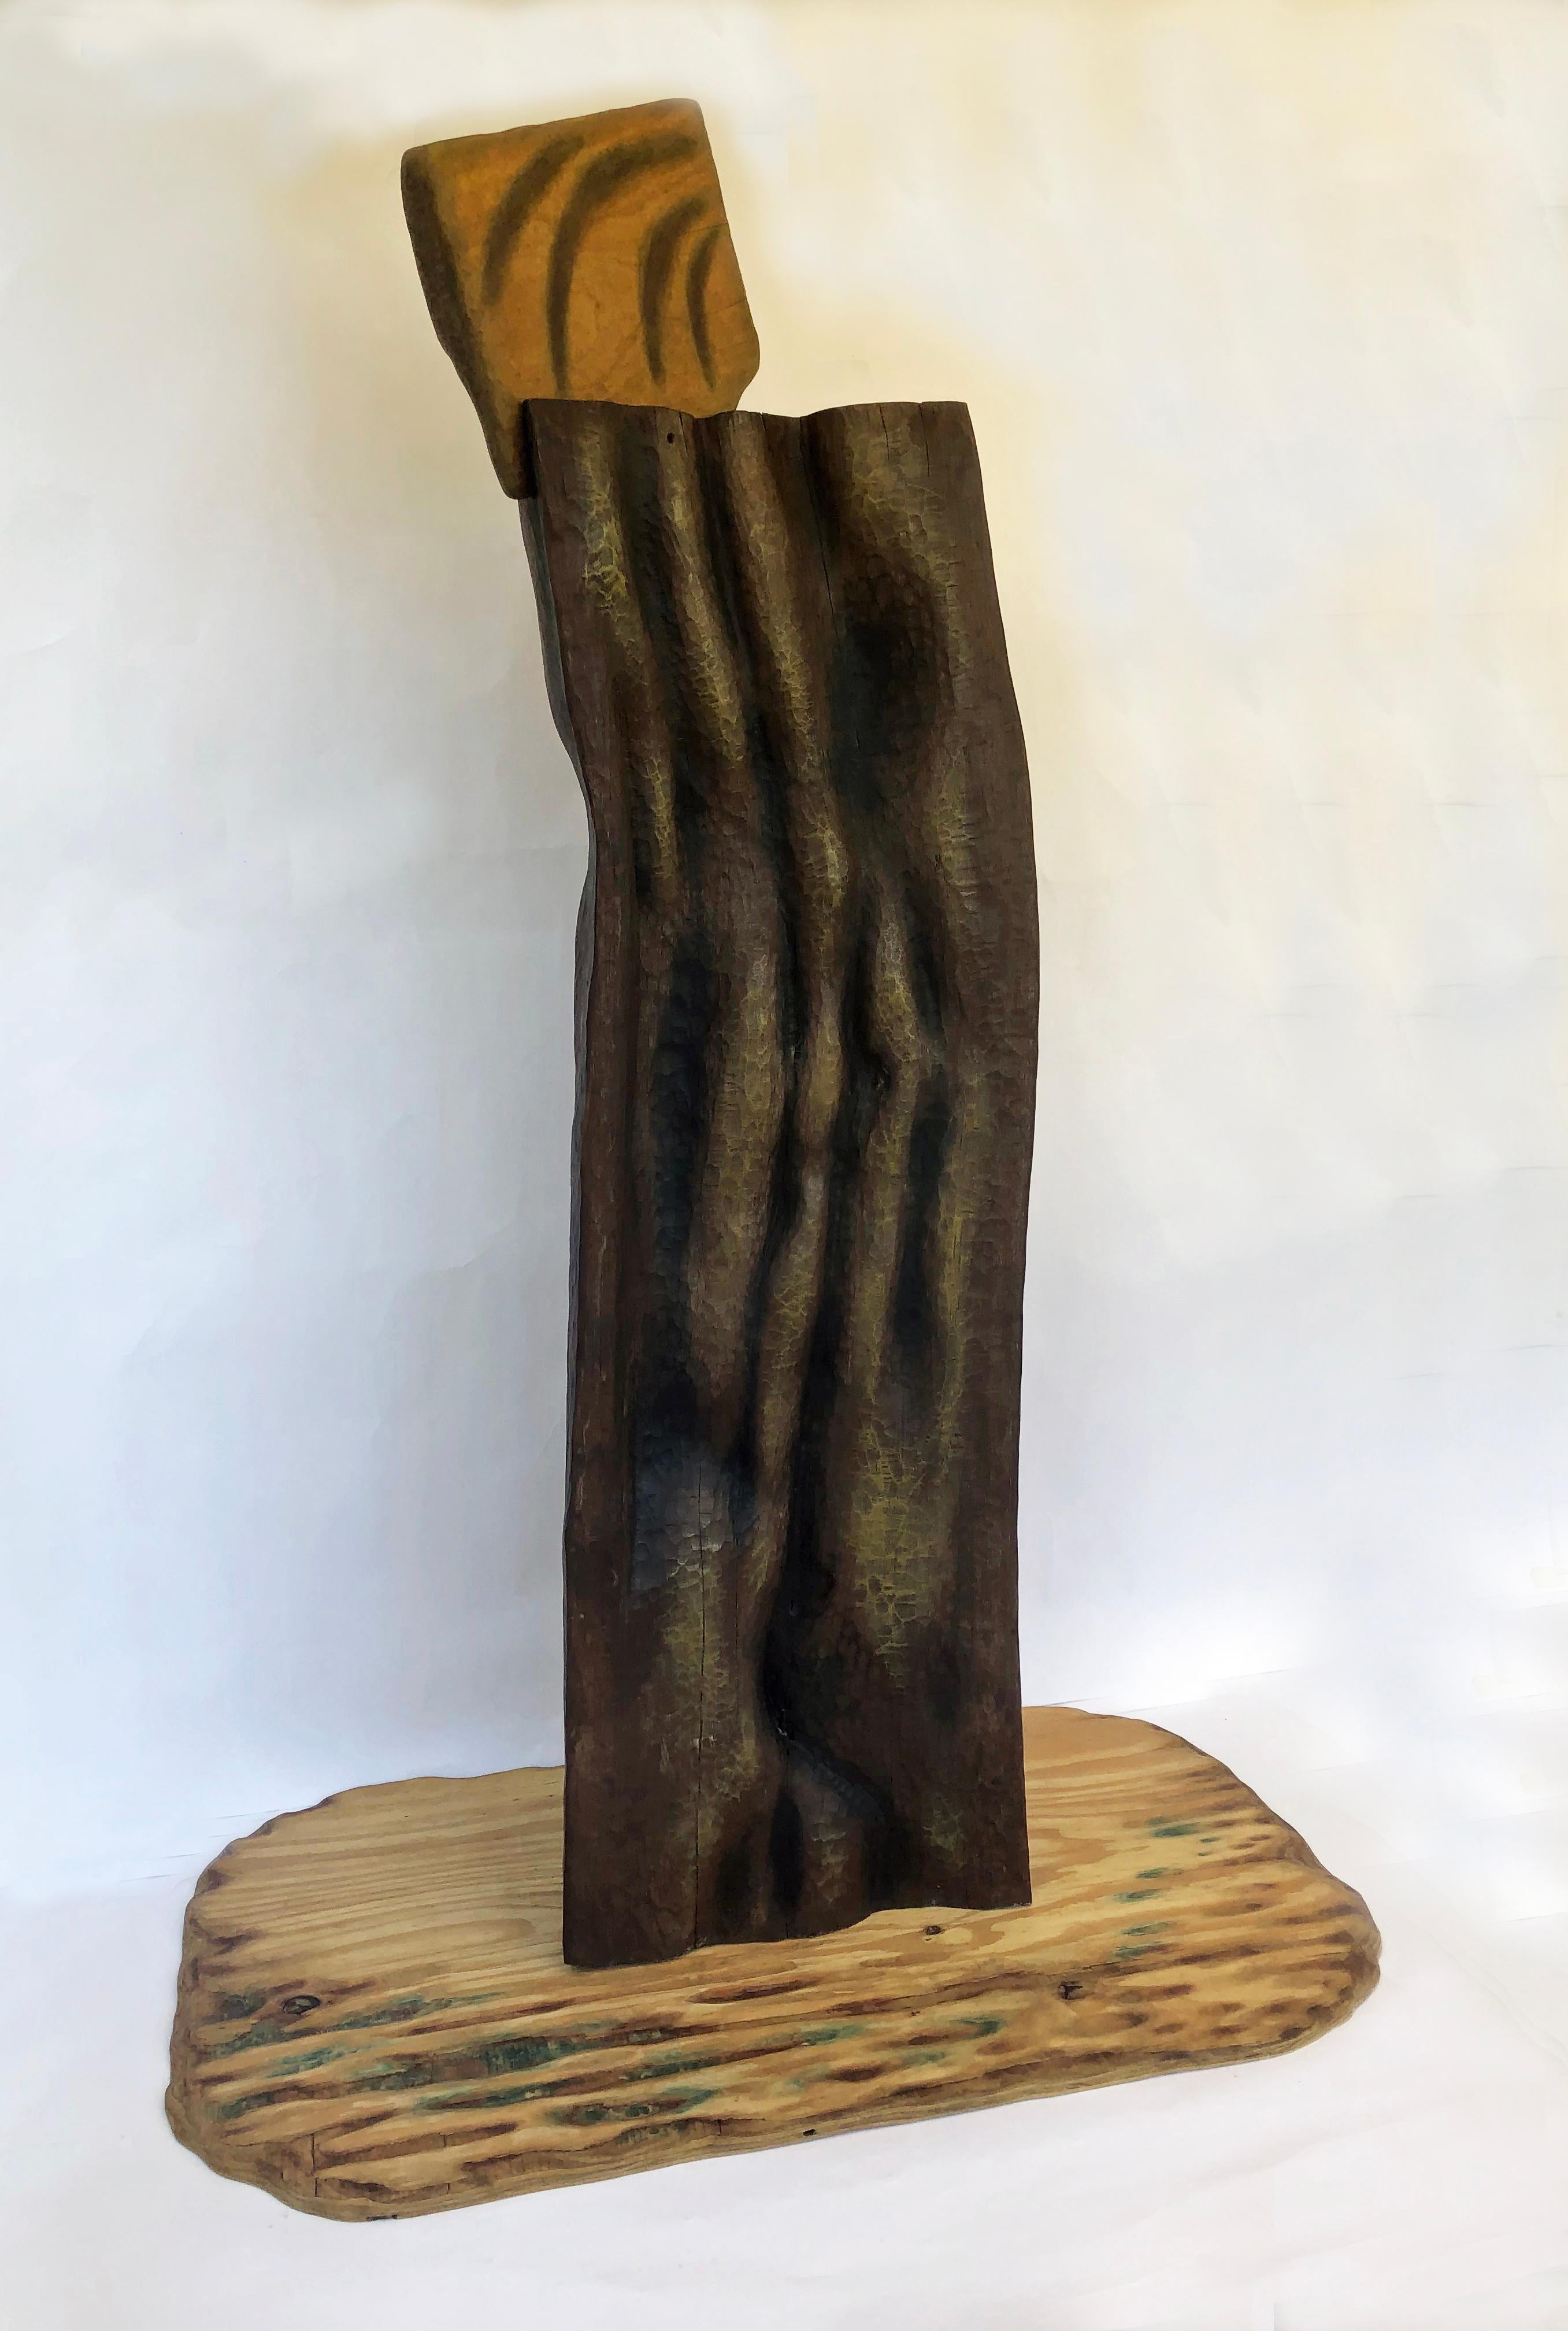 Watch-log - Sculpture by Christine Perri